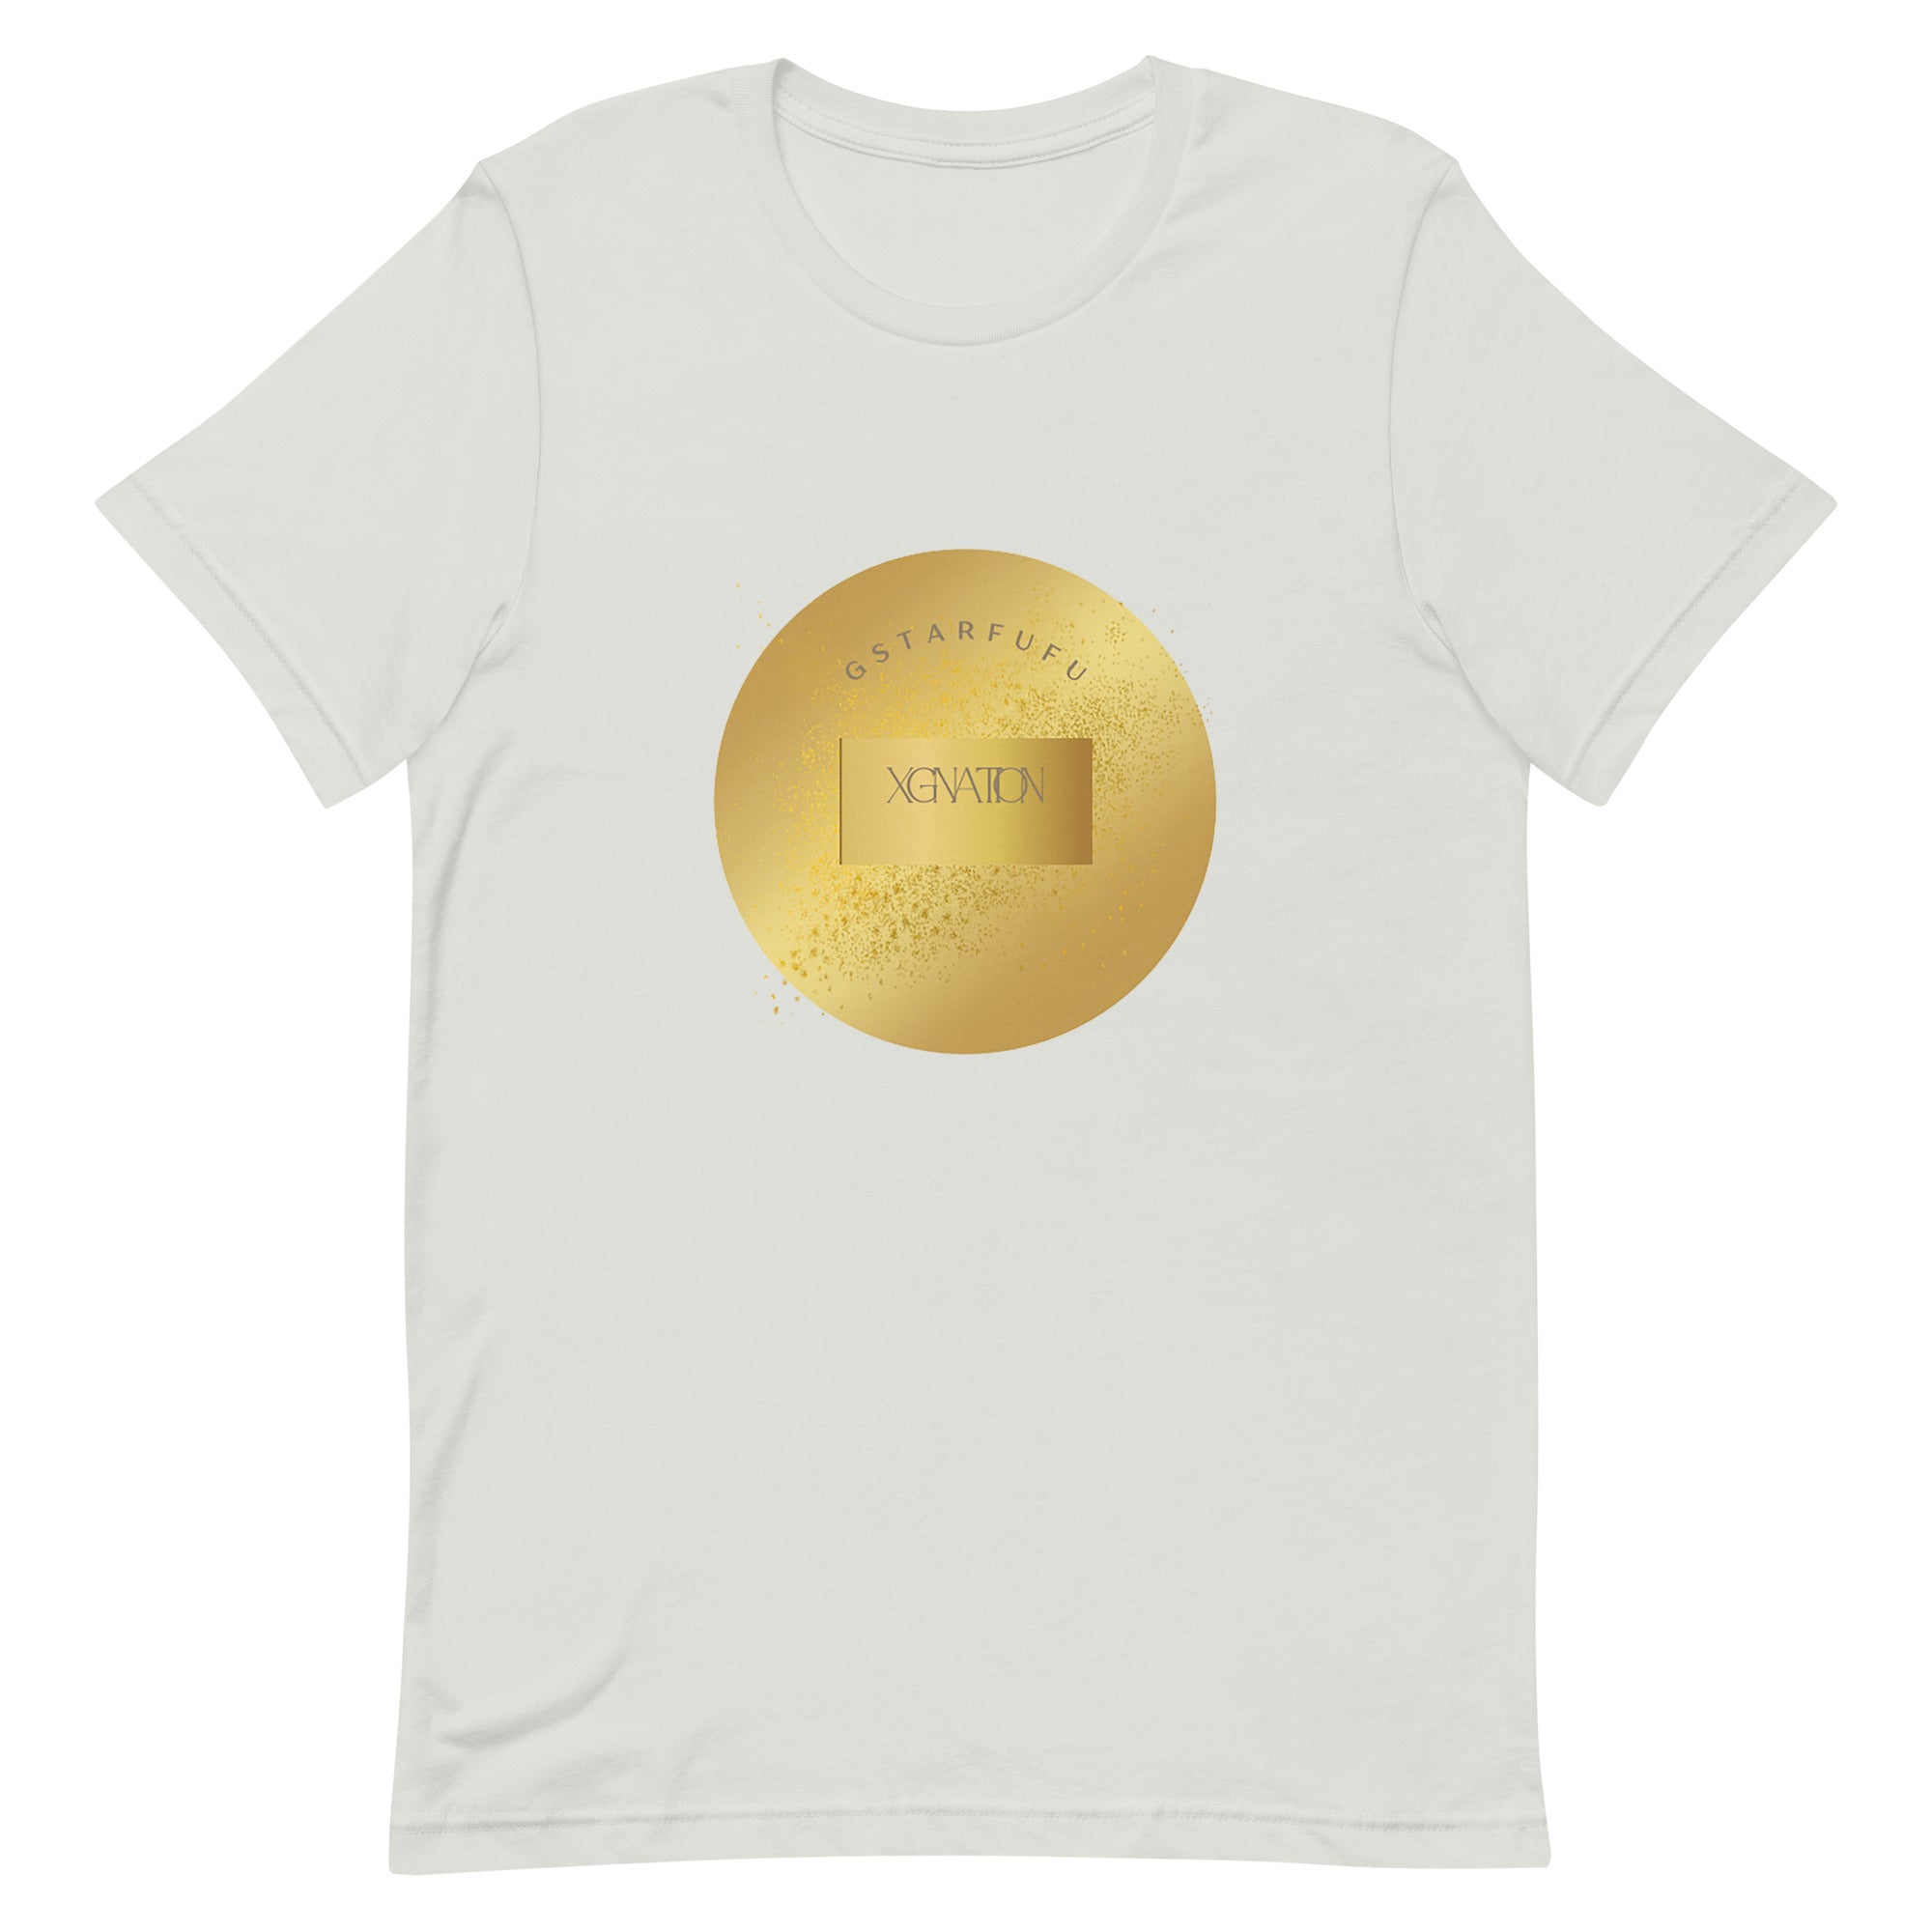 gstarfufu - Unisex t-shirt